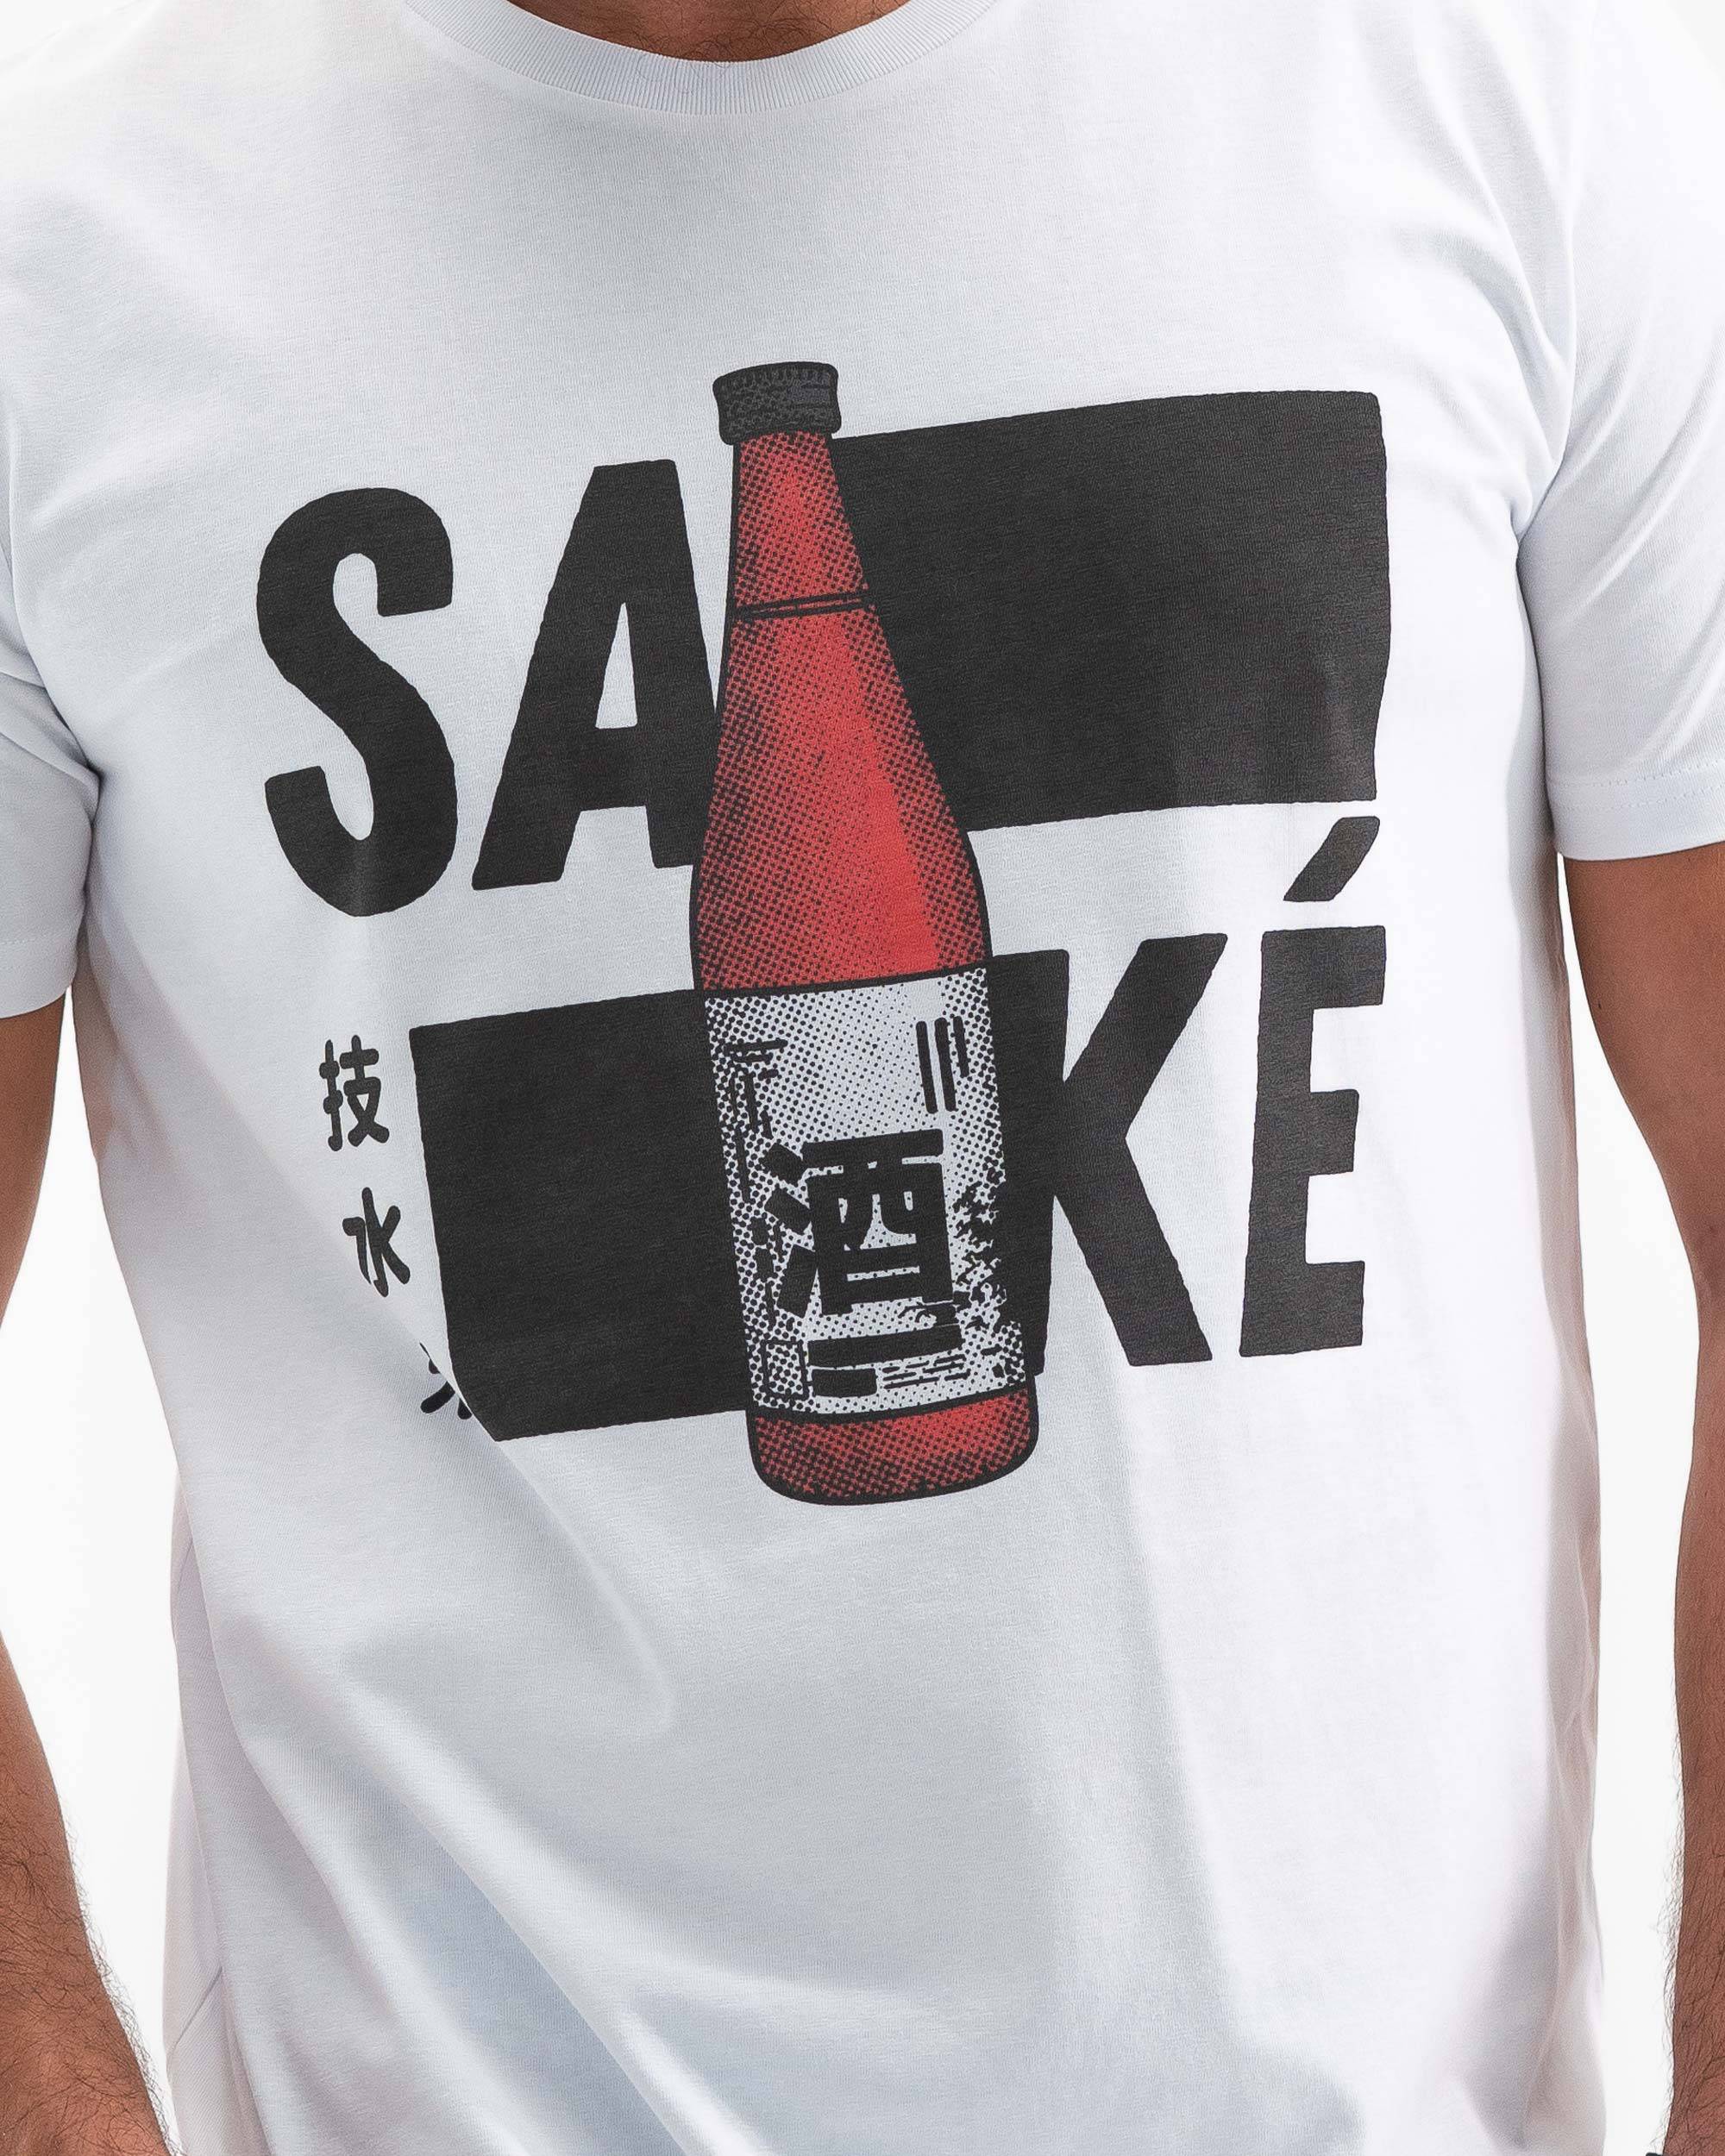 T-shirt Saké Grafitee